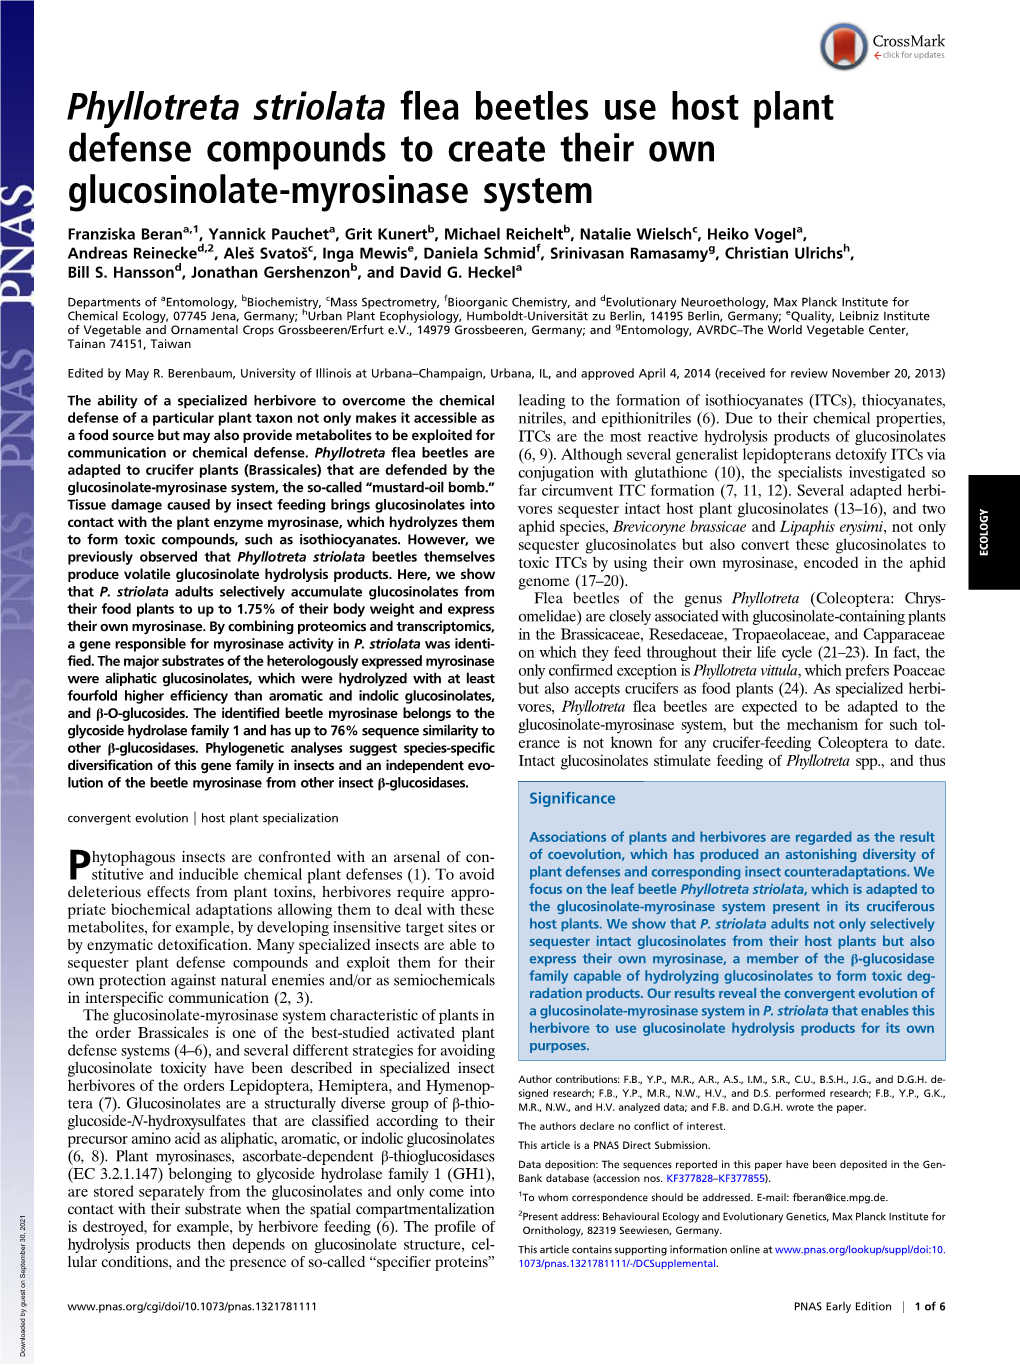 Phyllotreta Striolata Flea Beetles Use Host Plant Defense Compounds to Create Their Own Glucosinolate-Myrosinase System